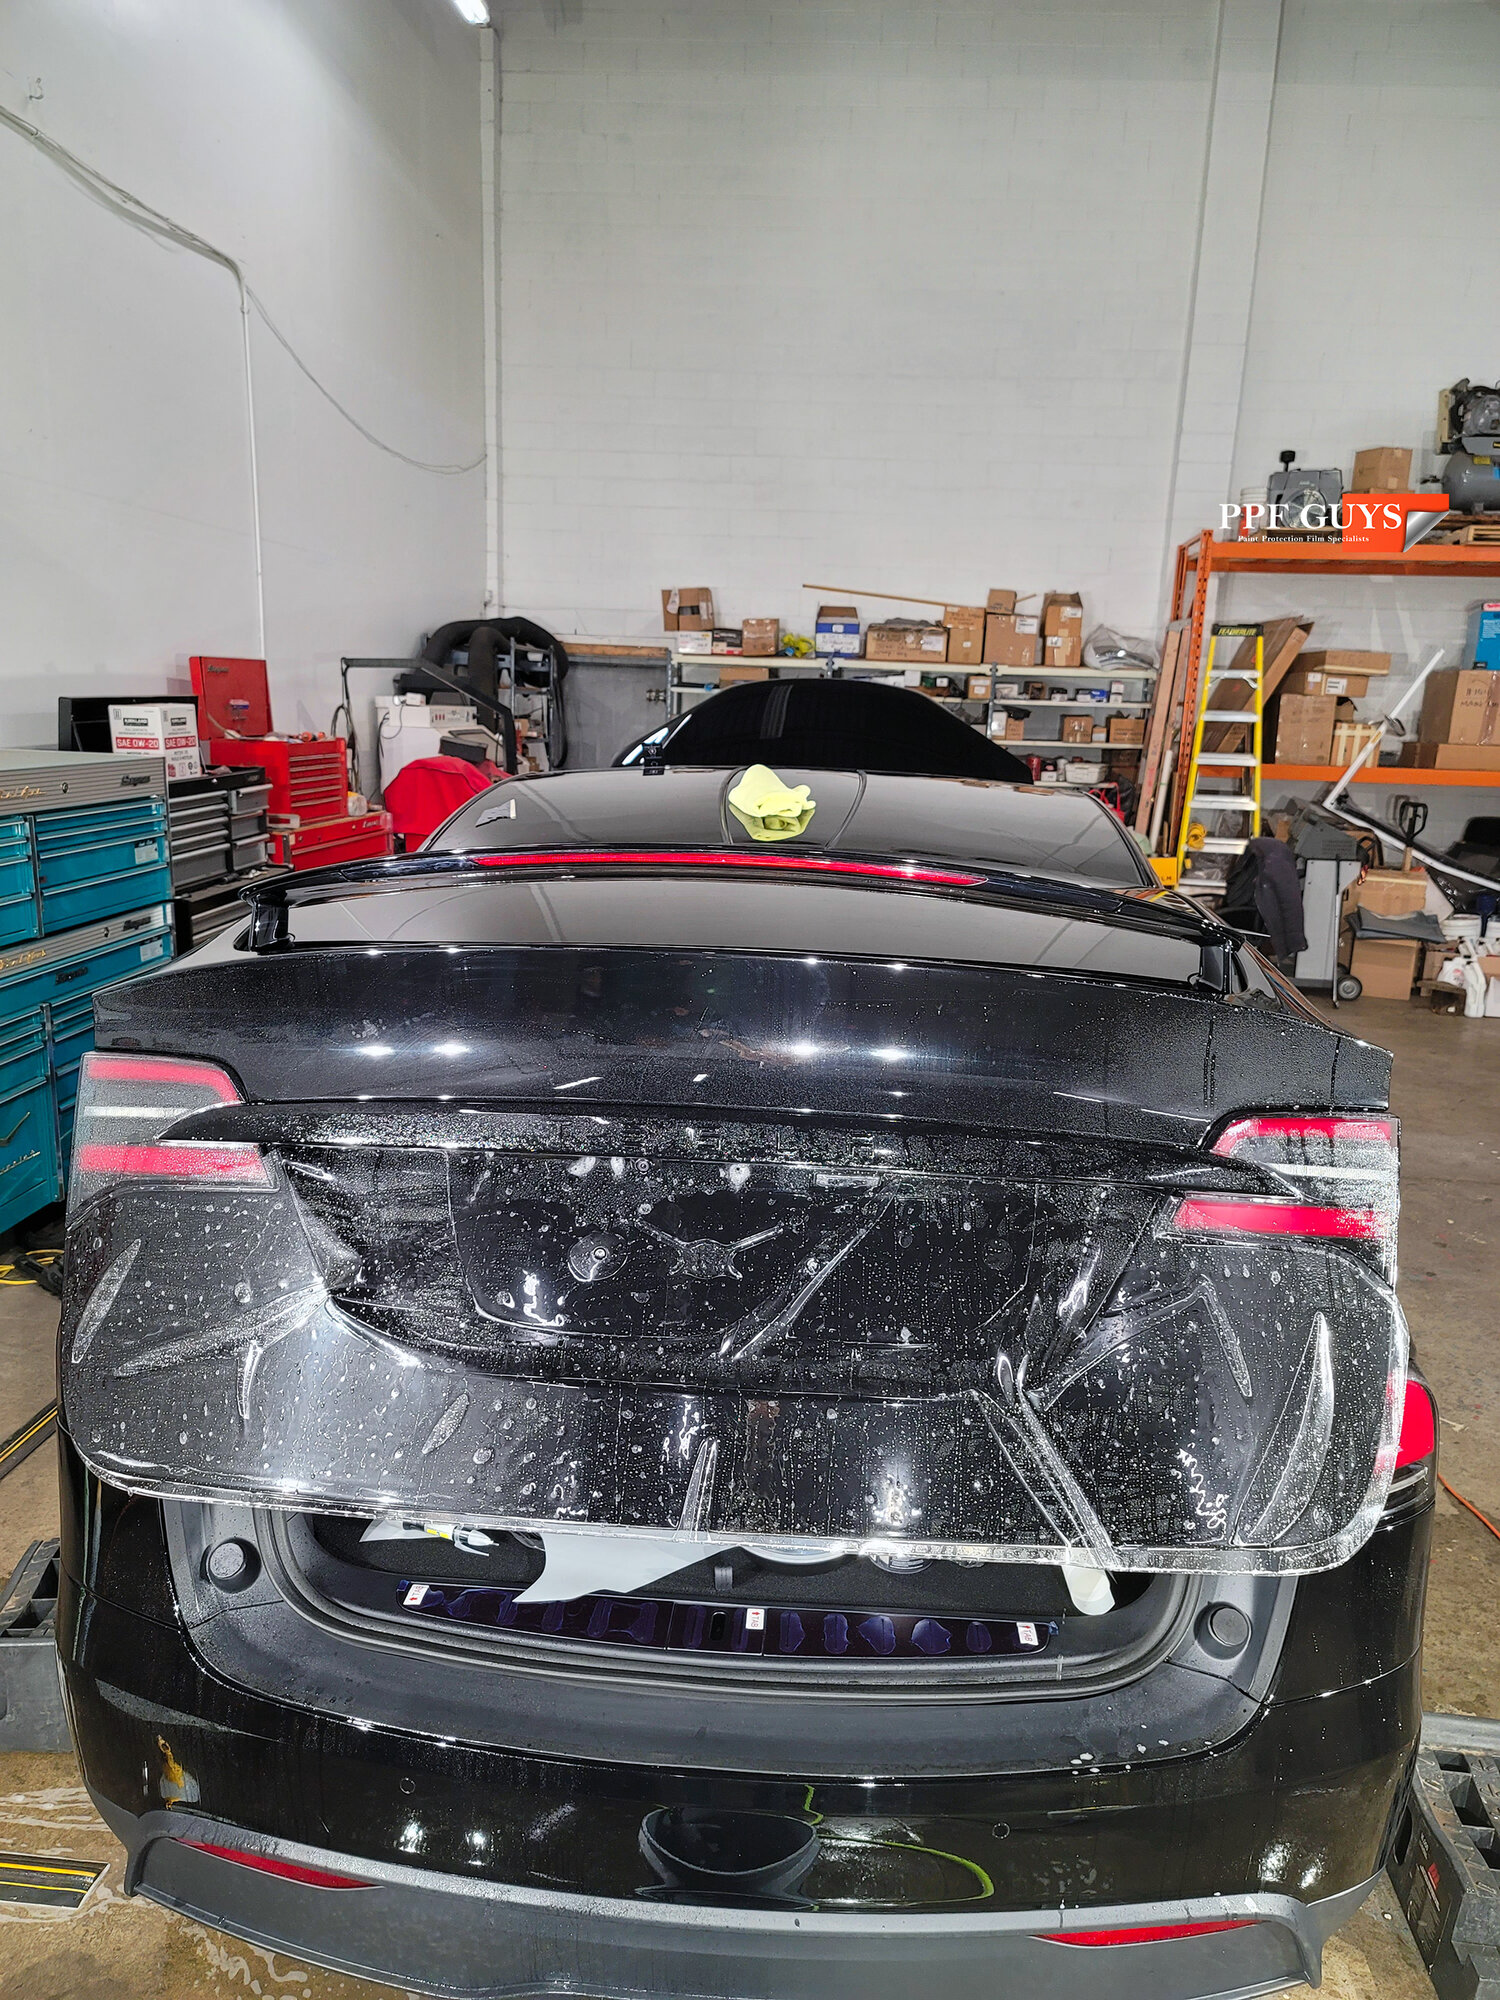 PPF Guys Tesla Model X Black Full Body Xpel Ultimate Fusion PPF (20).jpg